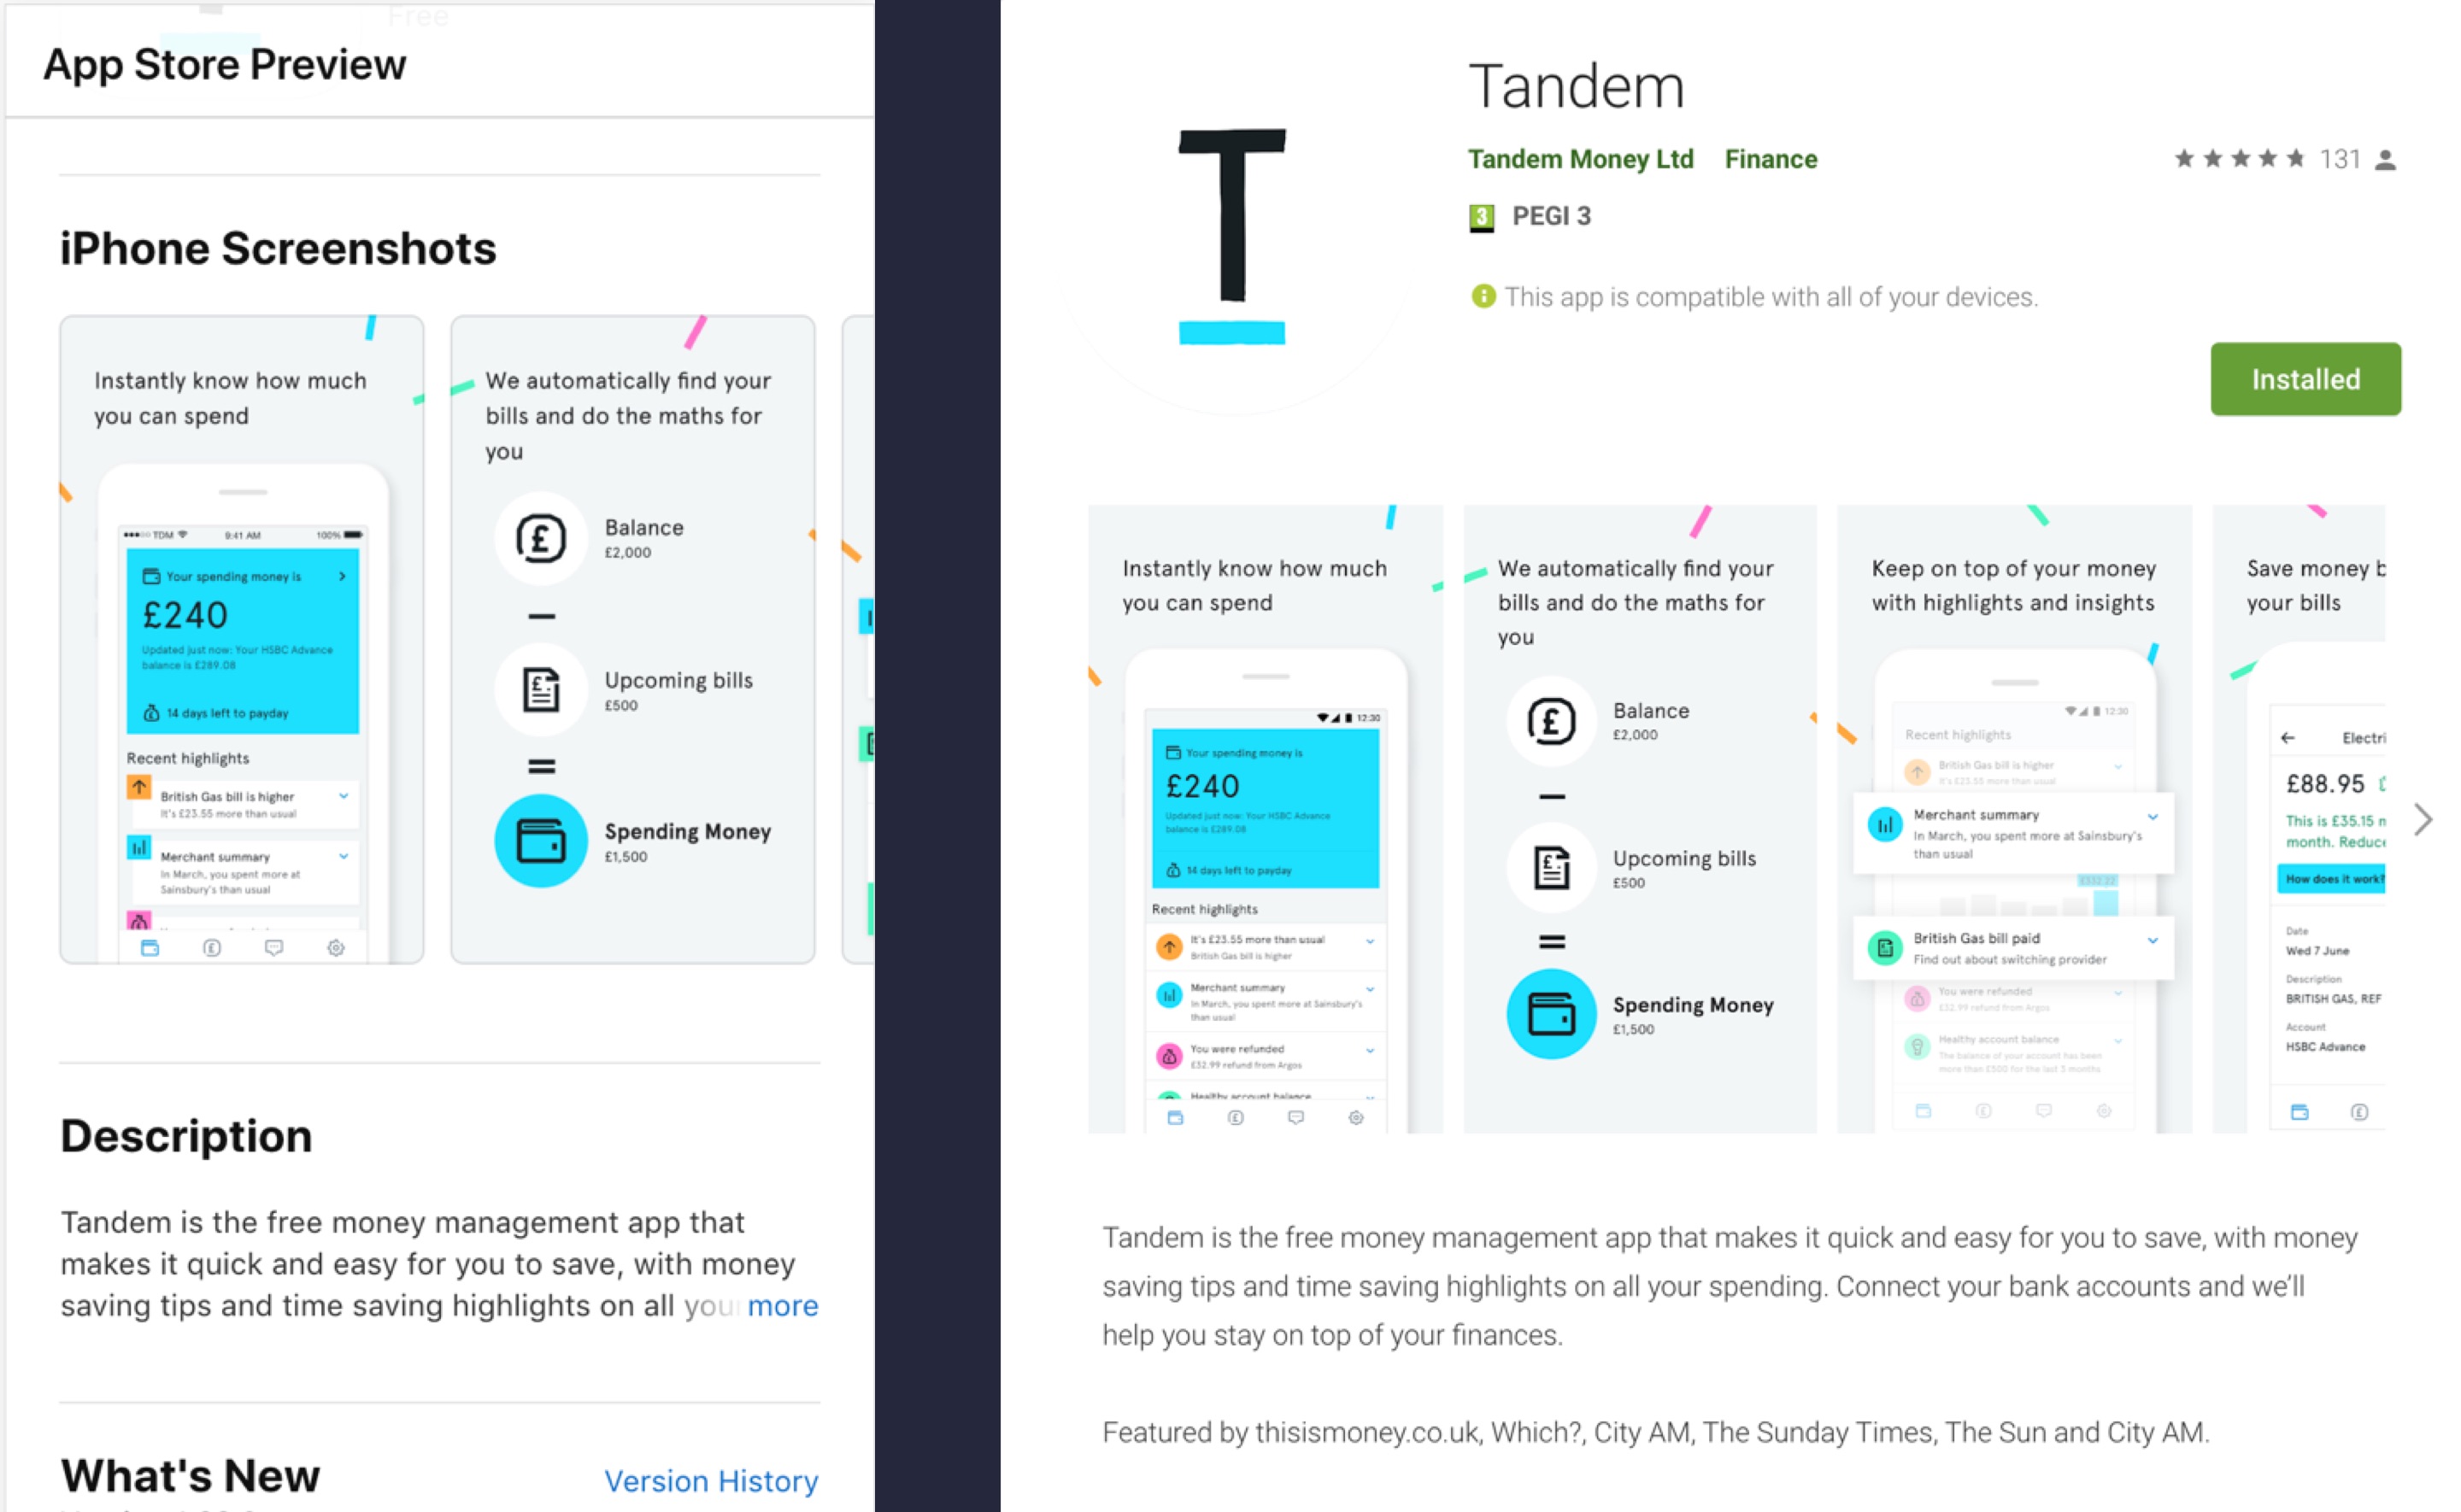 Tandem app store images